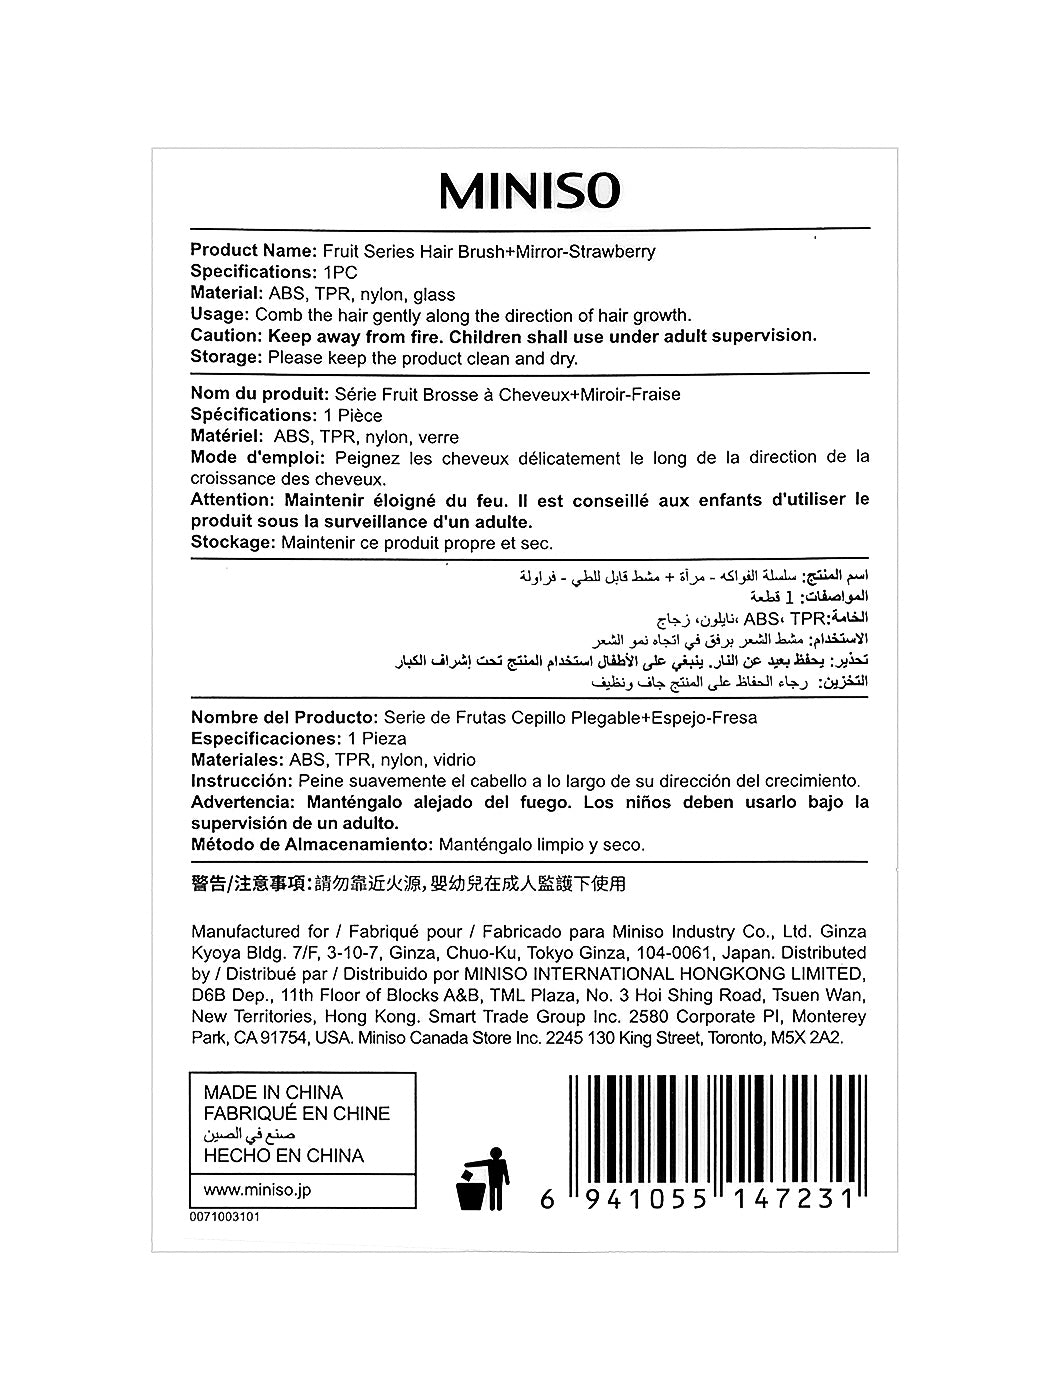 MINISO FRUIT SERIES HAIR BRUSH+MIRROR-STRAWBERRY 2008083210109 COMB